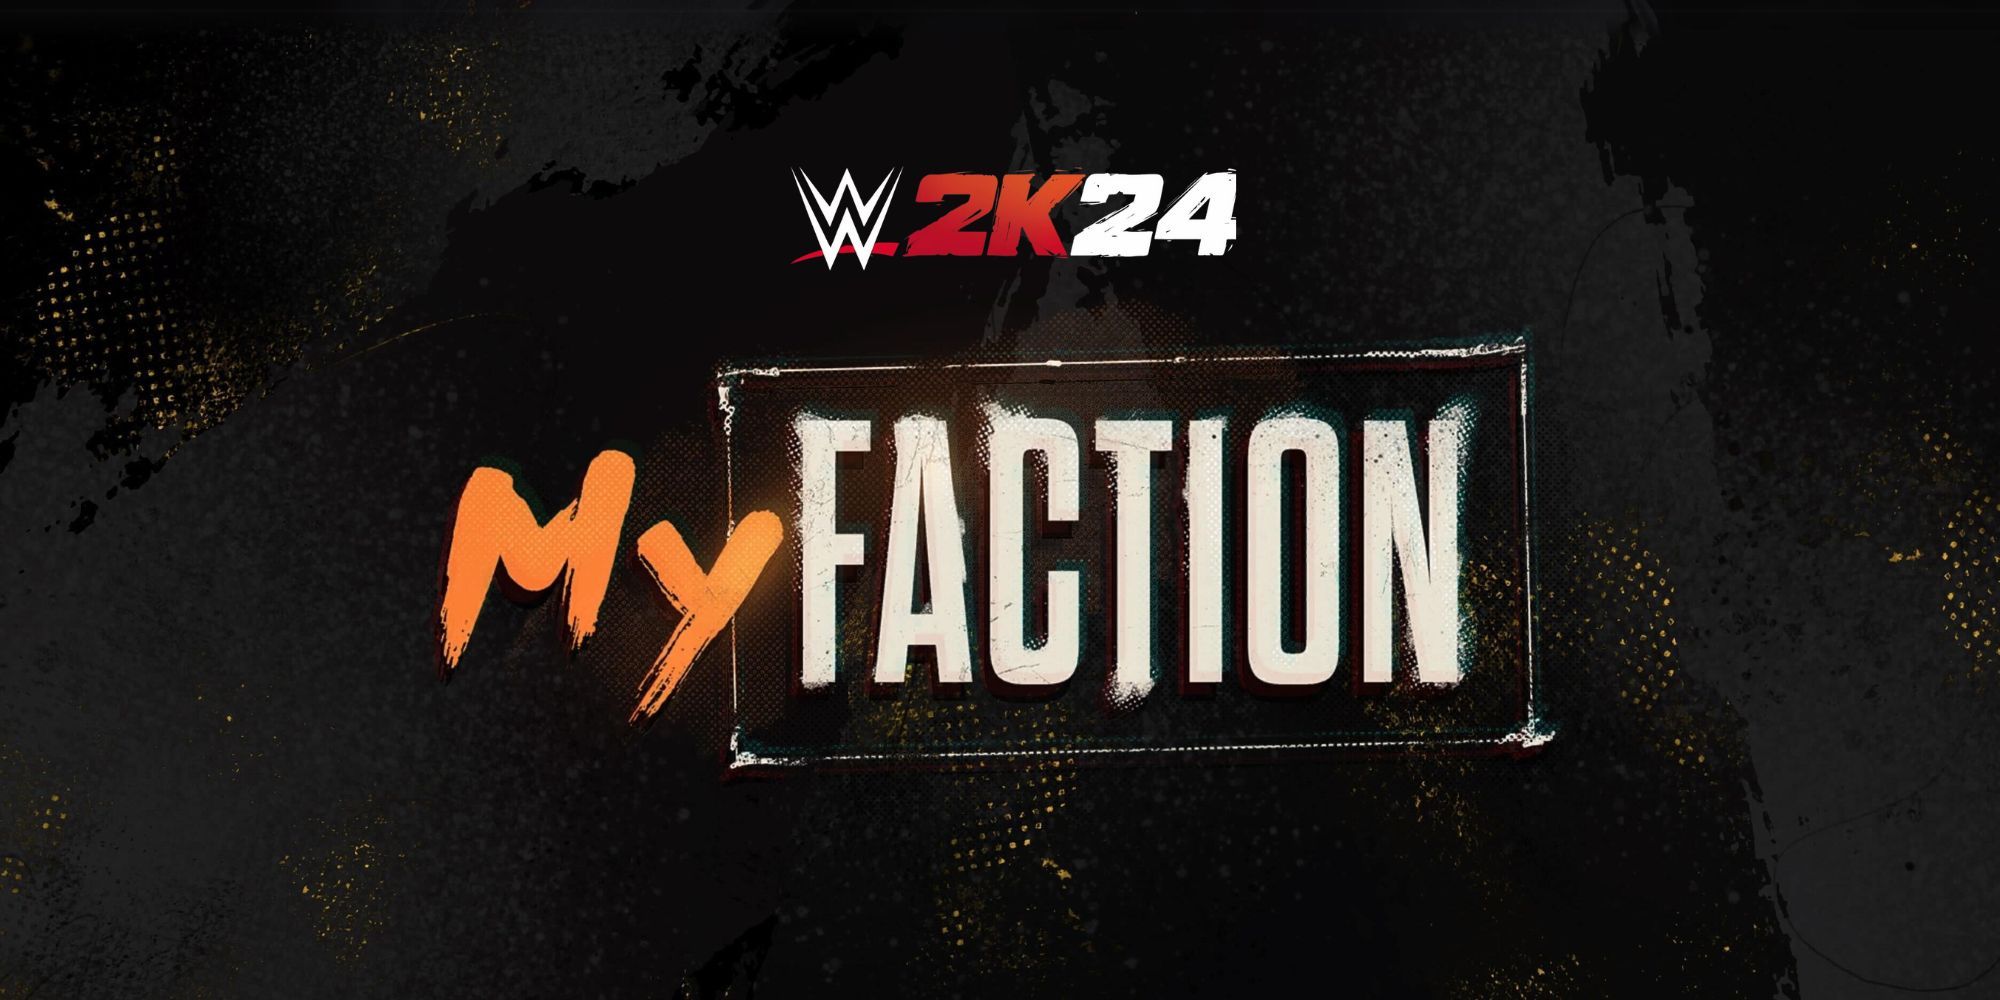 The MyFaction logo and WWE 2K24 logo